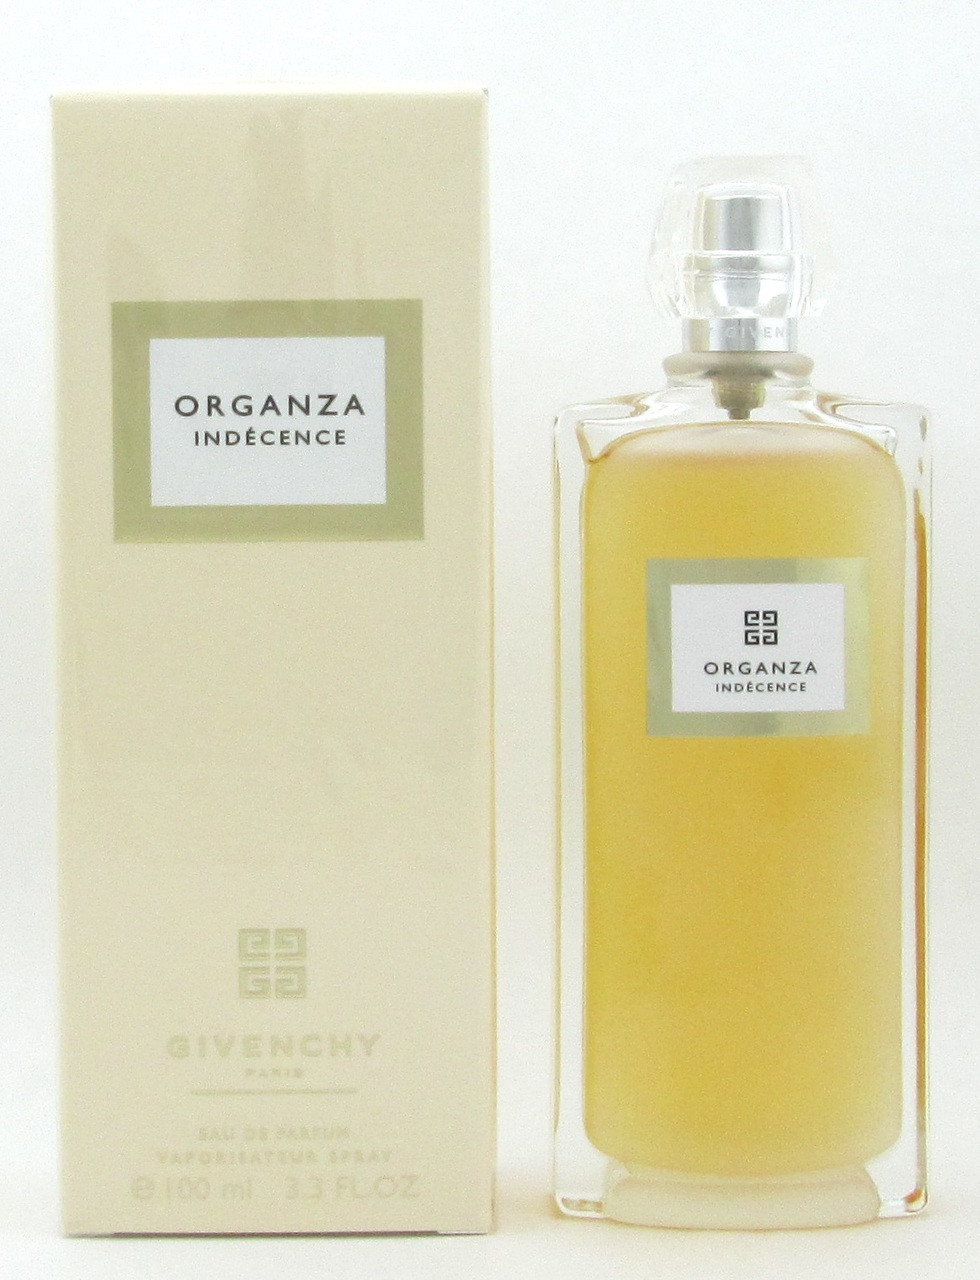 Organza Indecence Mythical by Givenchy 3.3 oz./ 100 ml. Eau de Parfum